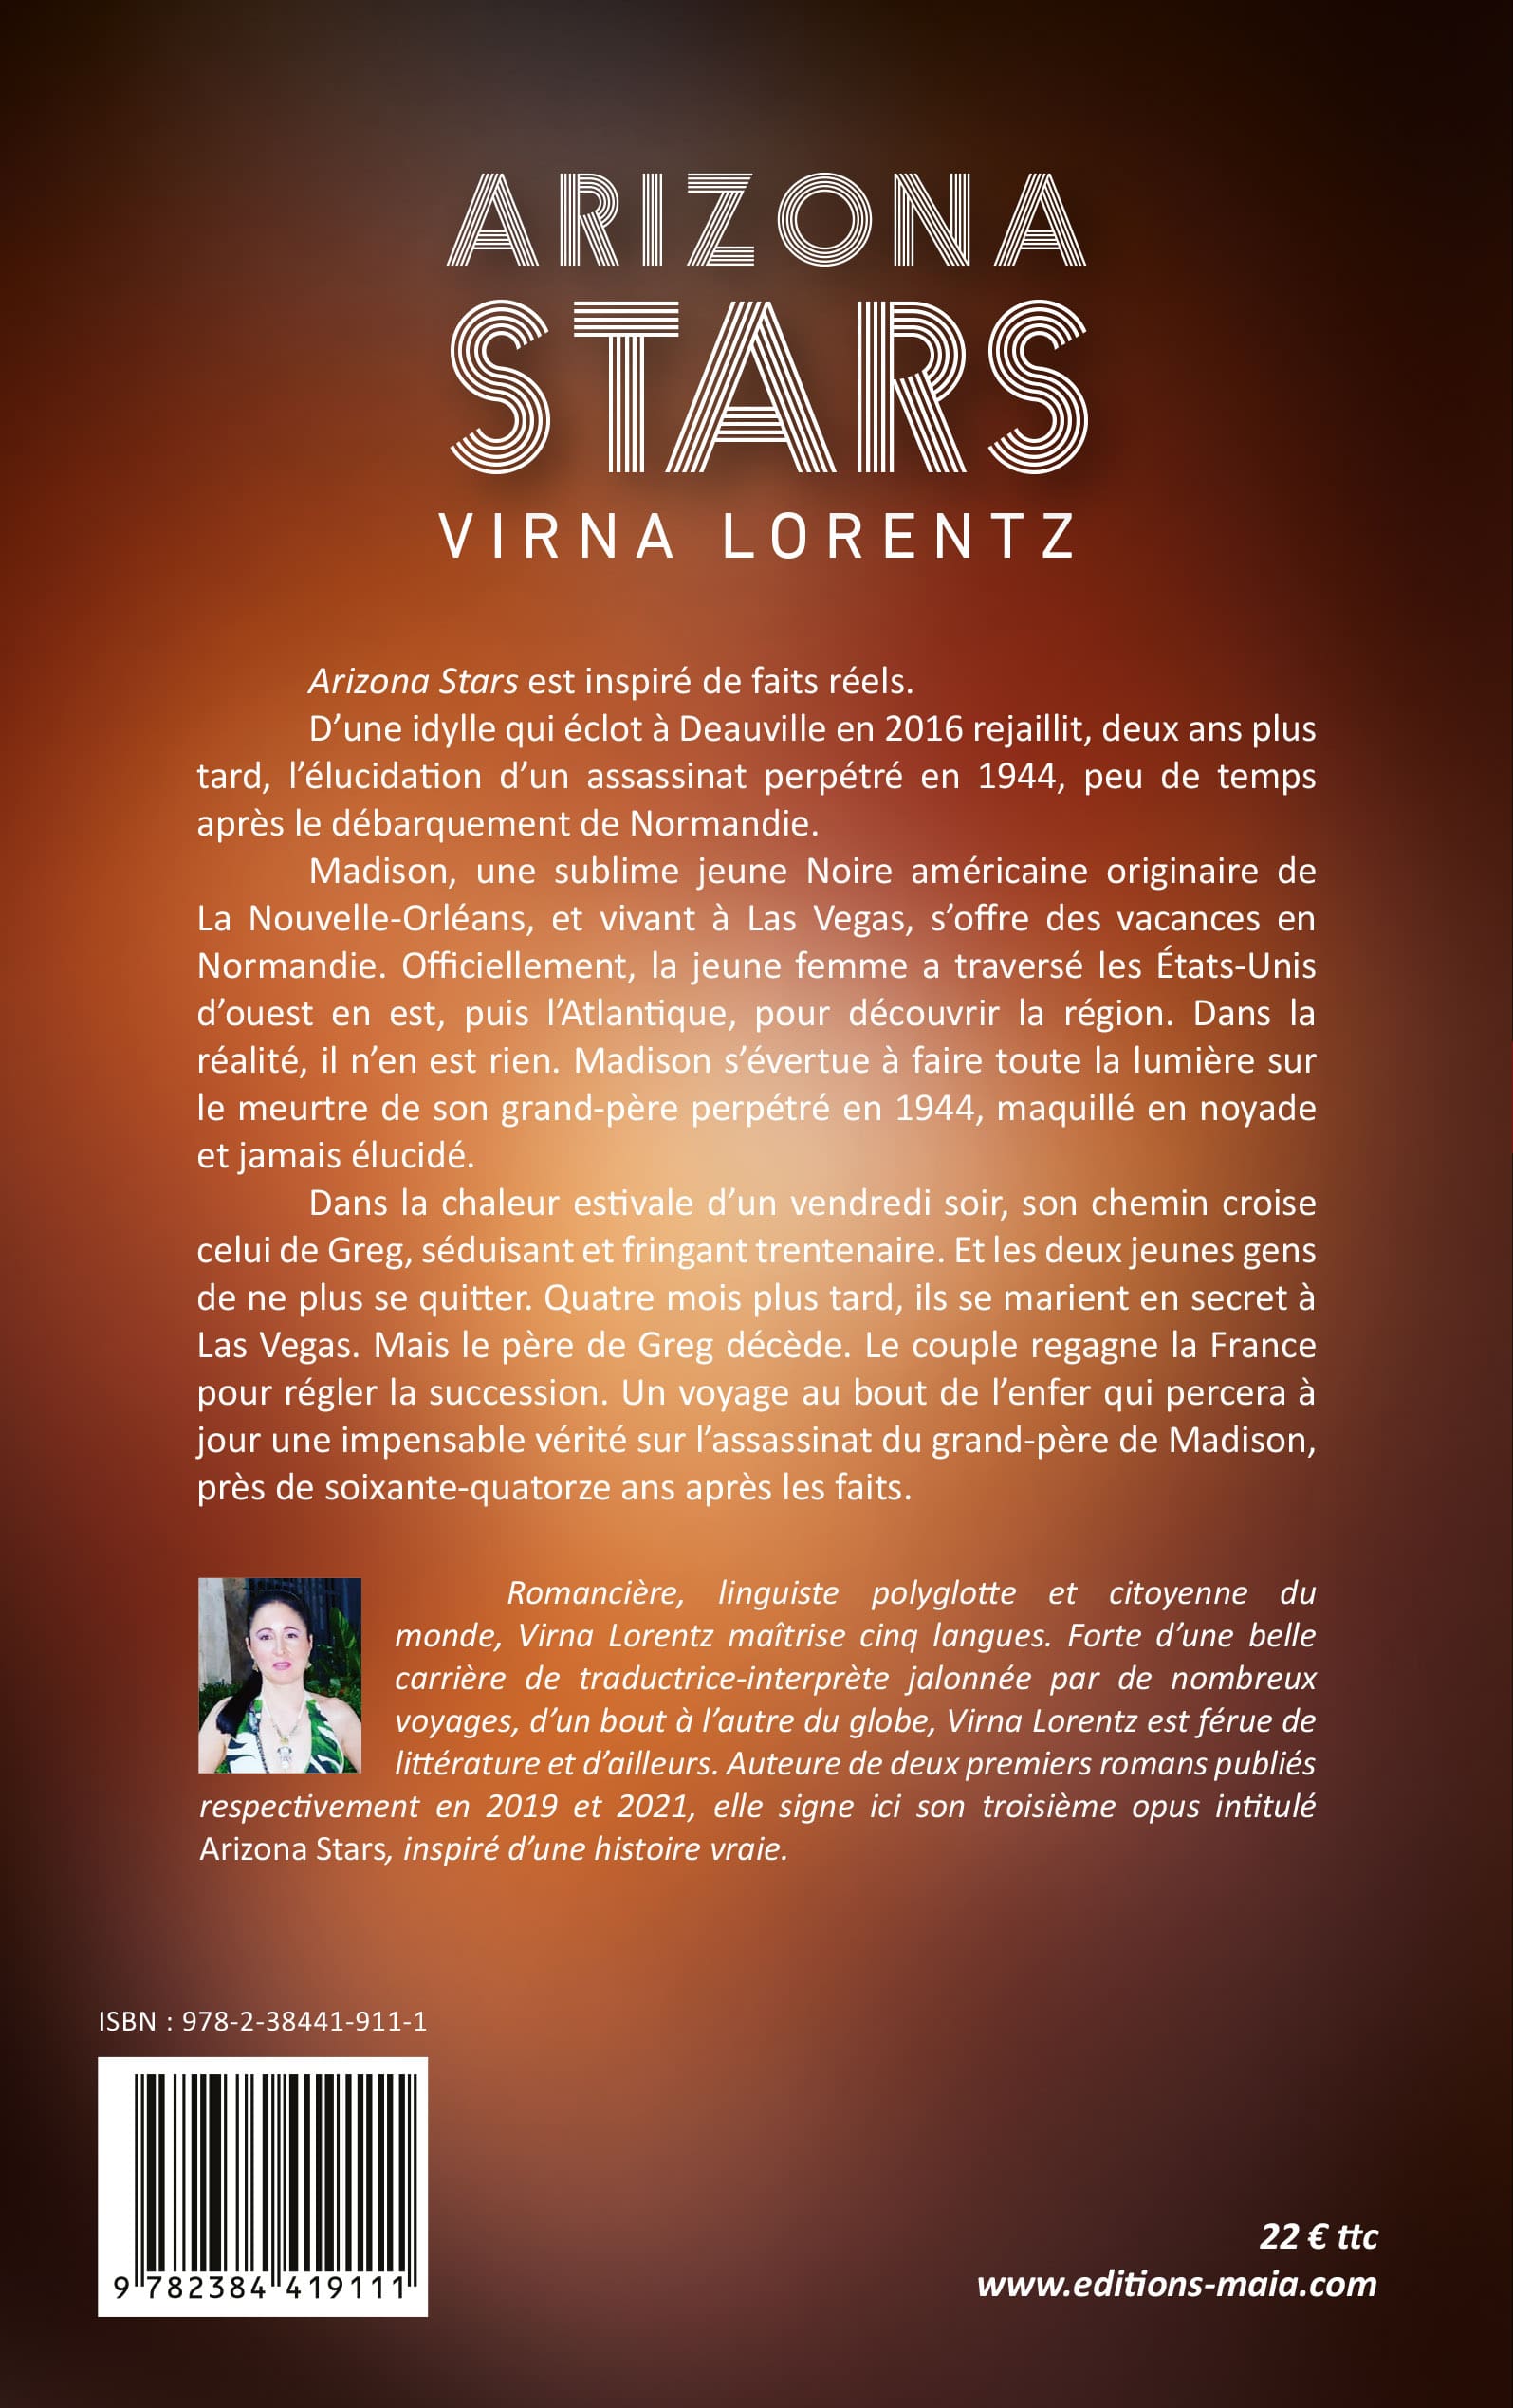 Virna LORENTZ - Arizona stars 2